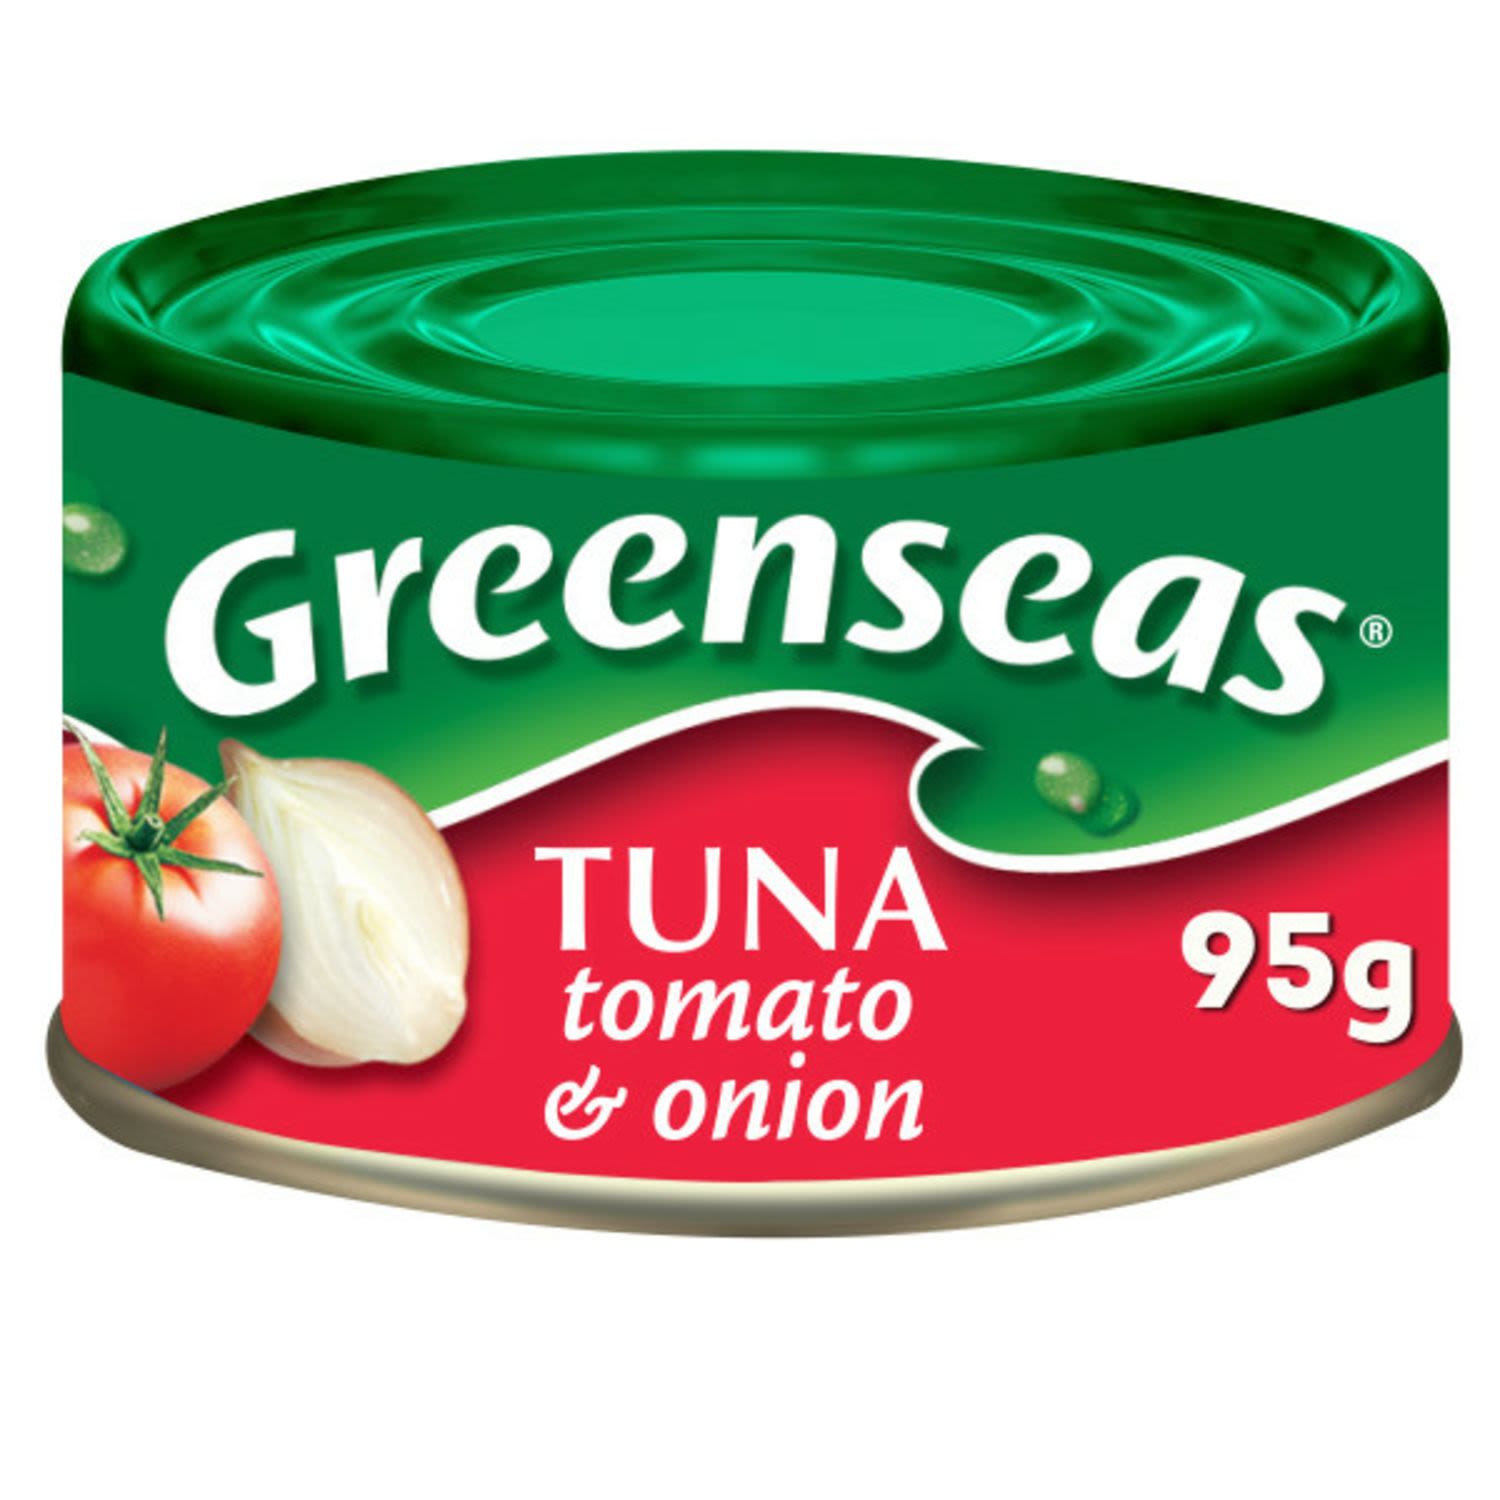 Greenseas Tuna Tomato & Onion 95gm